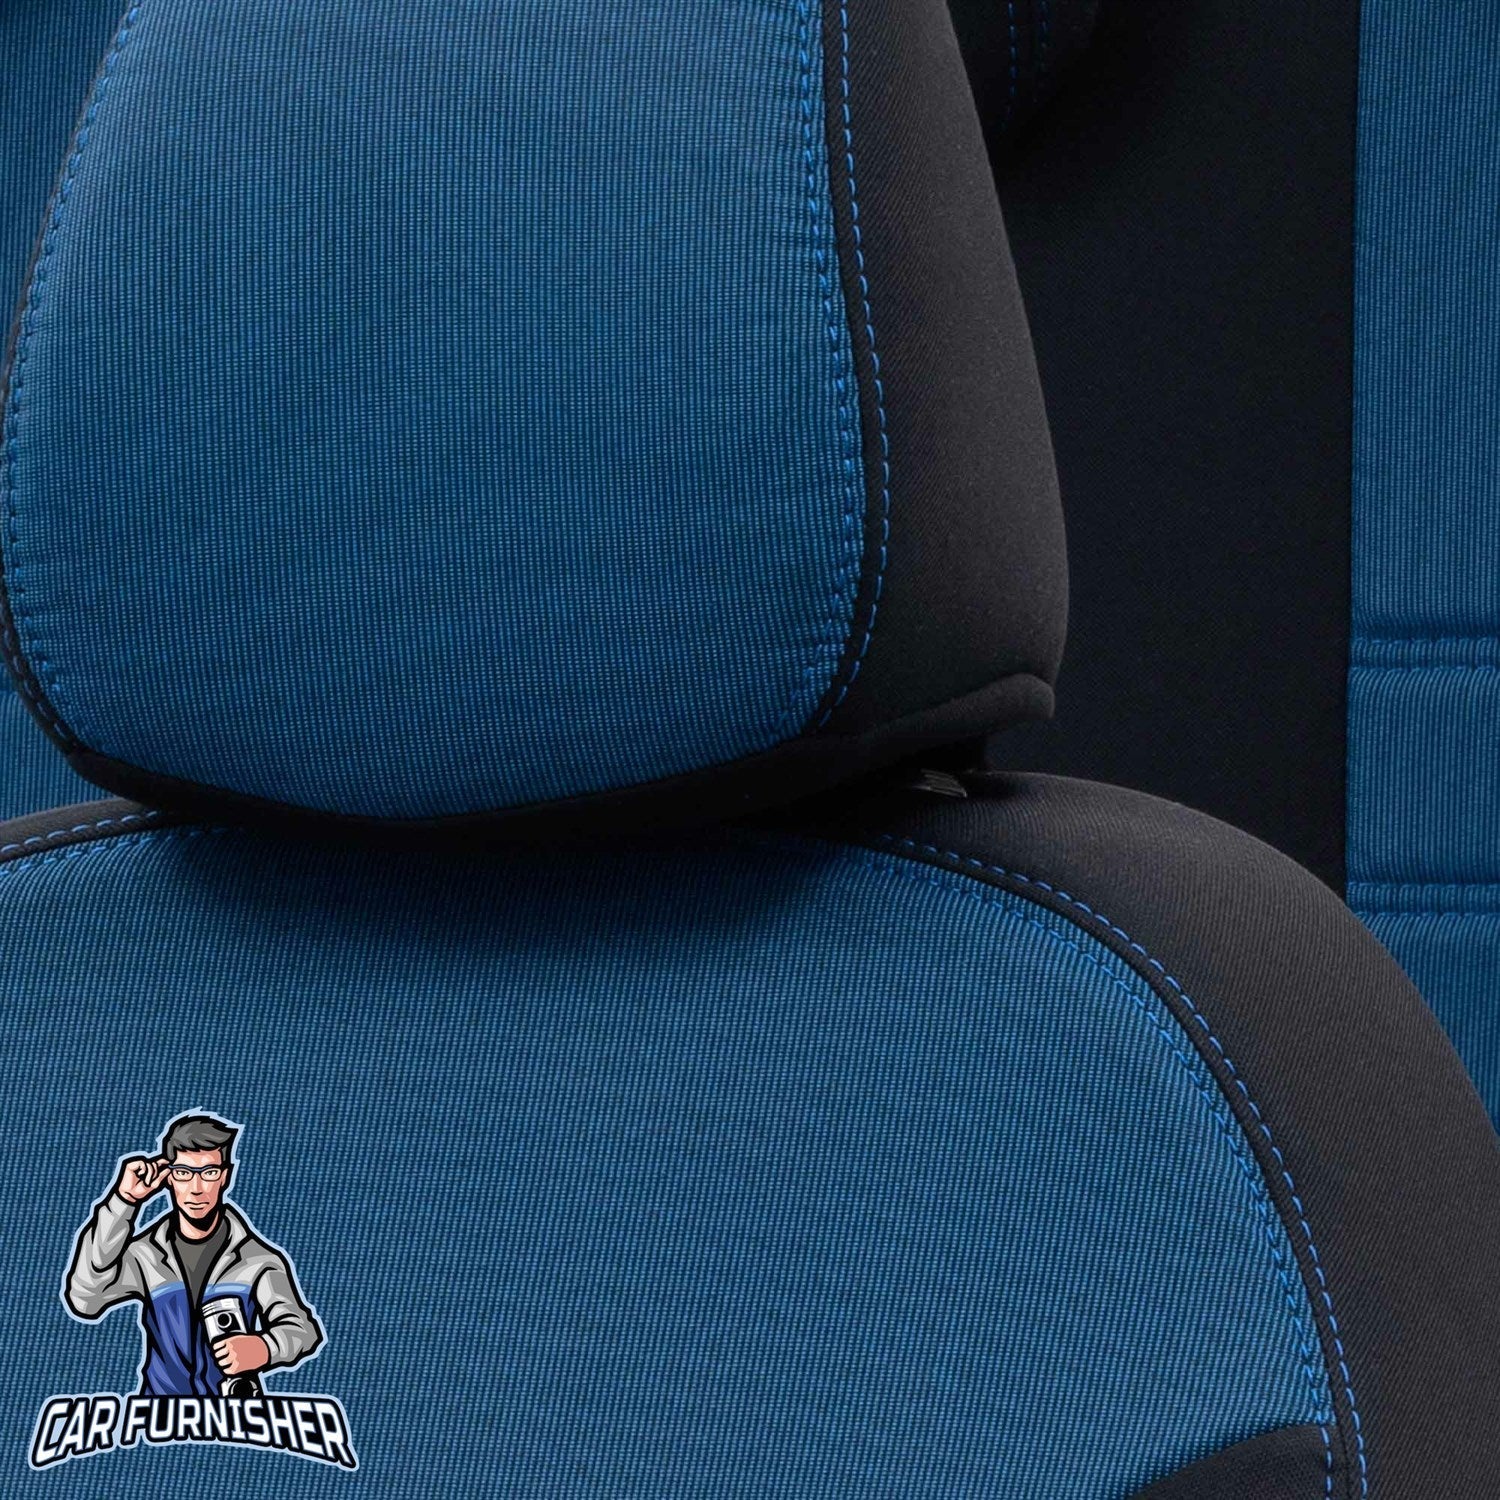 Fiat Marea Seat Covers Original Jacquard Design Blue Jacquard Fabric